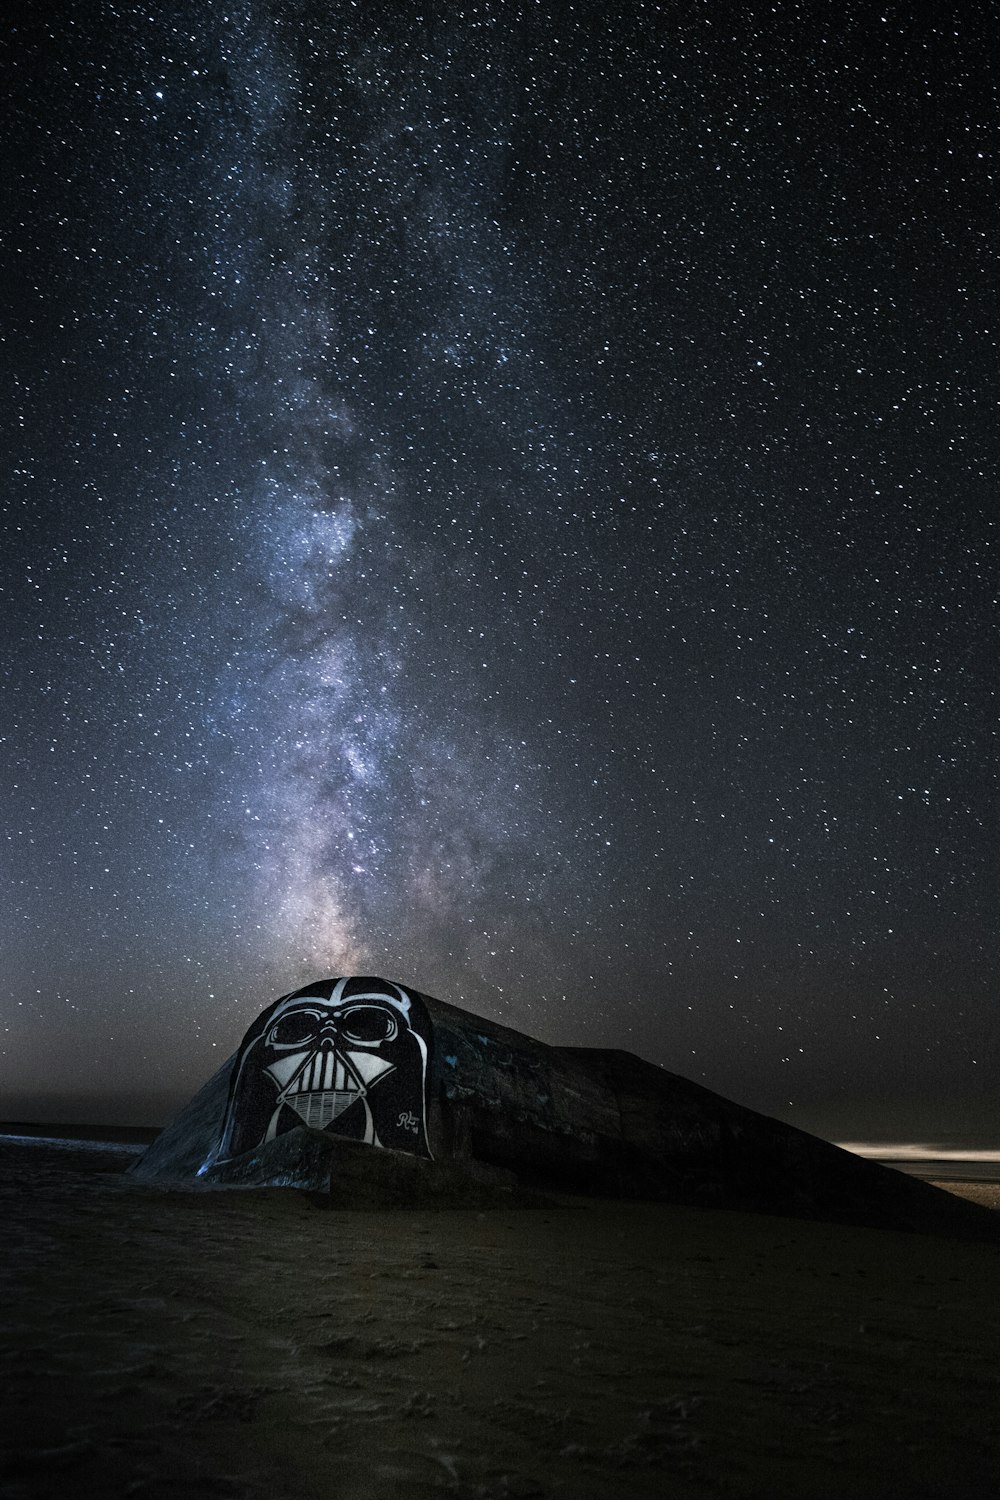 Star Wars Darth Vader Digital Wallpaper Photo Free Grey Image On